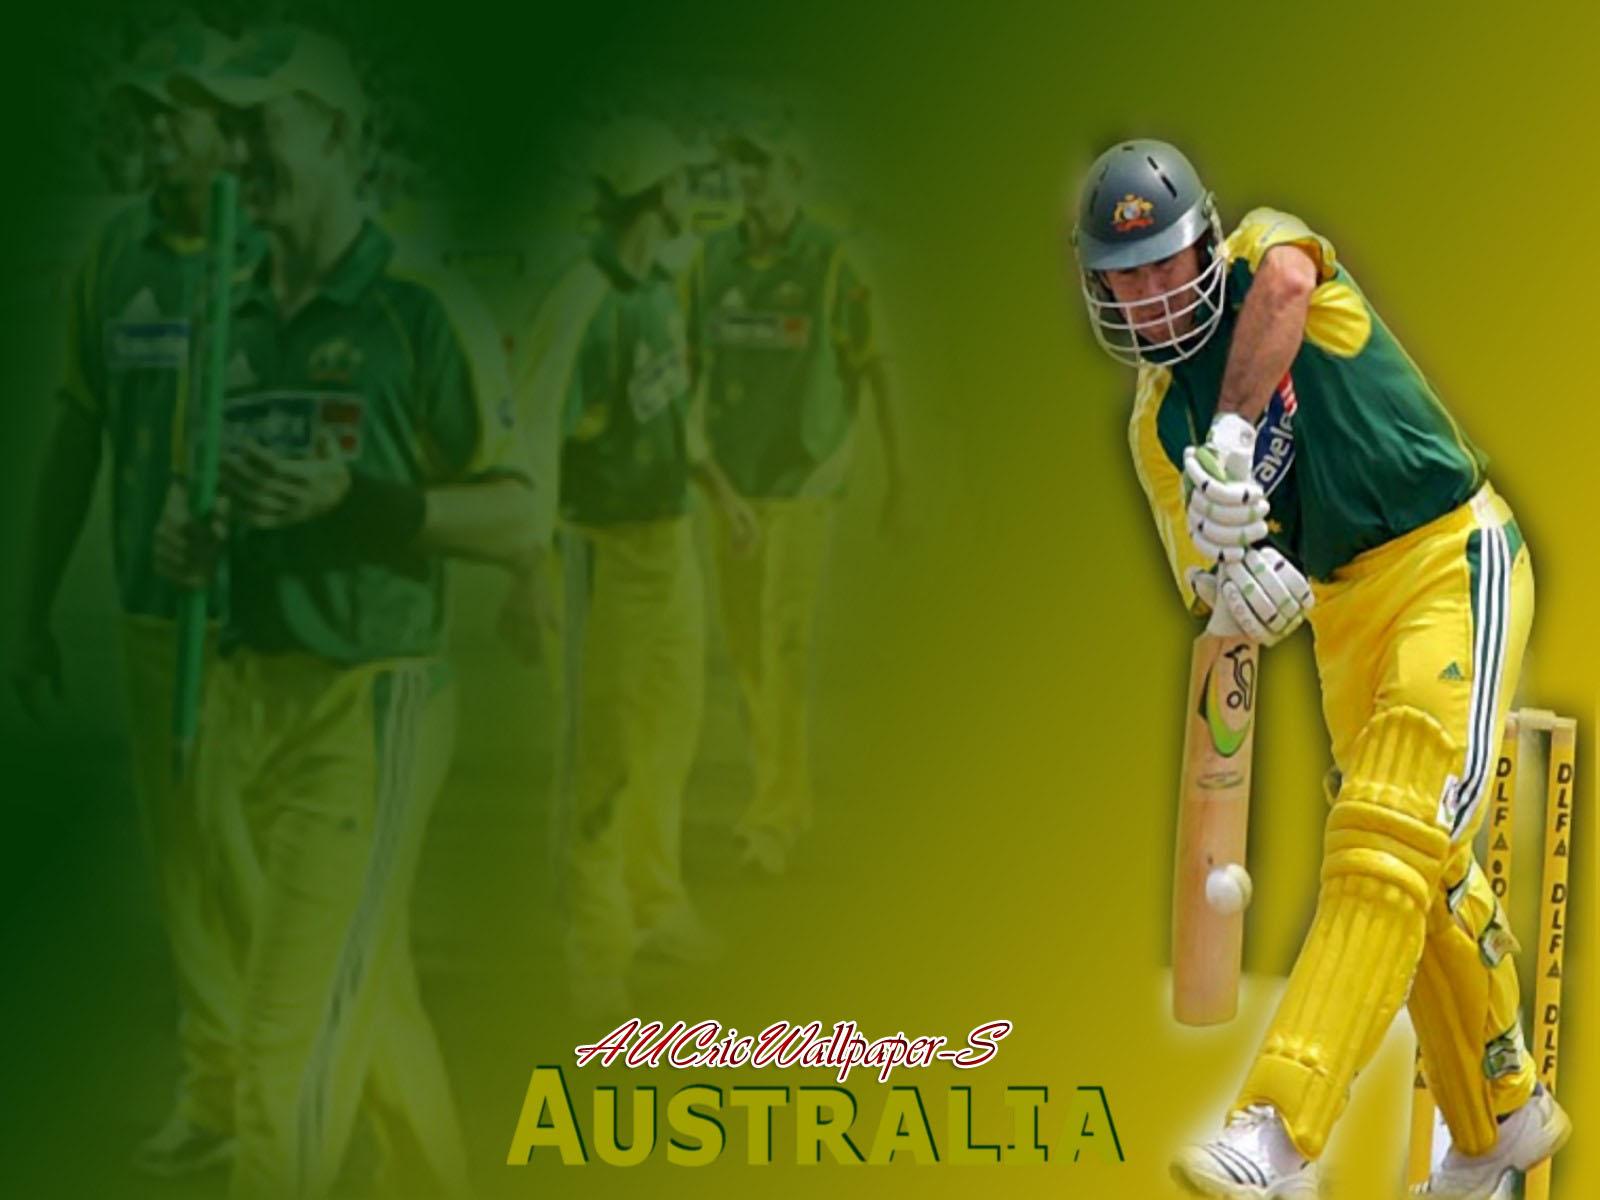 Australian Cricket Team Wallpaper: Australia Cricket Team Wallpaper 5